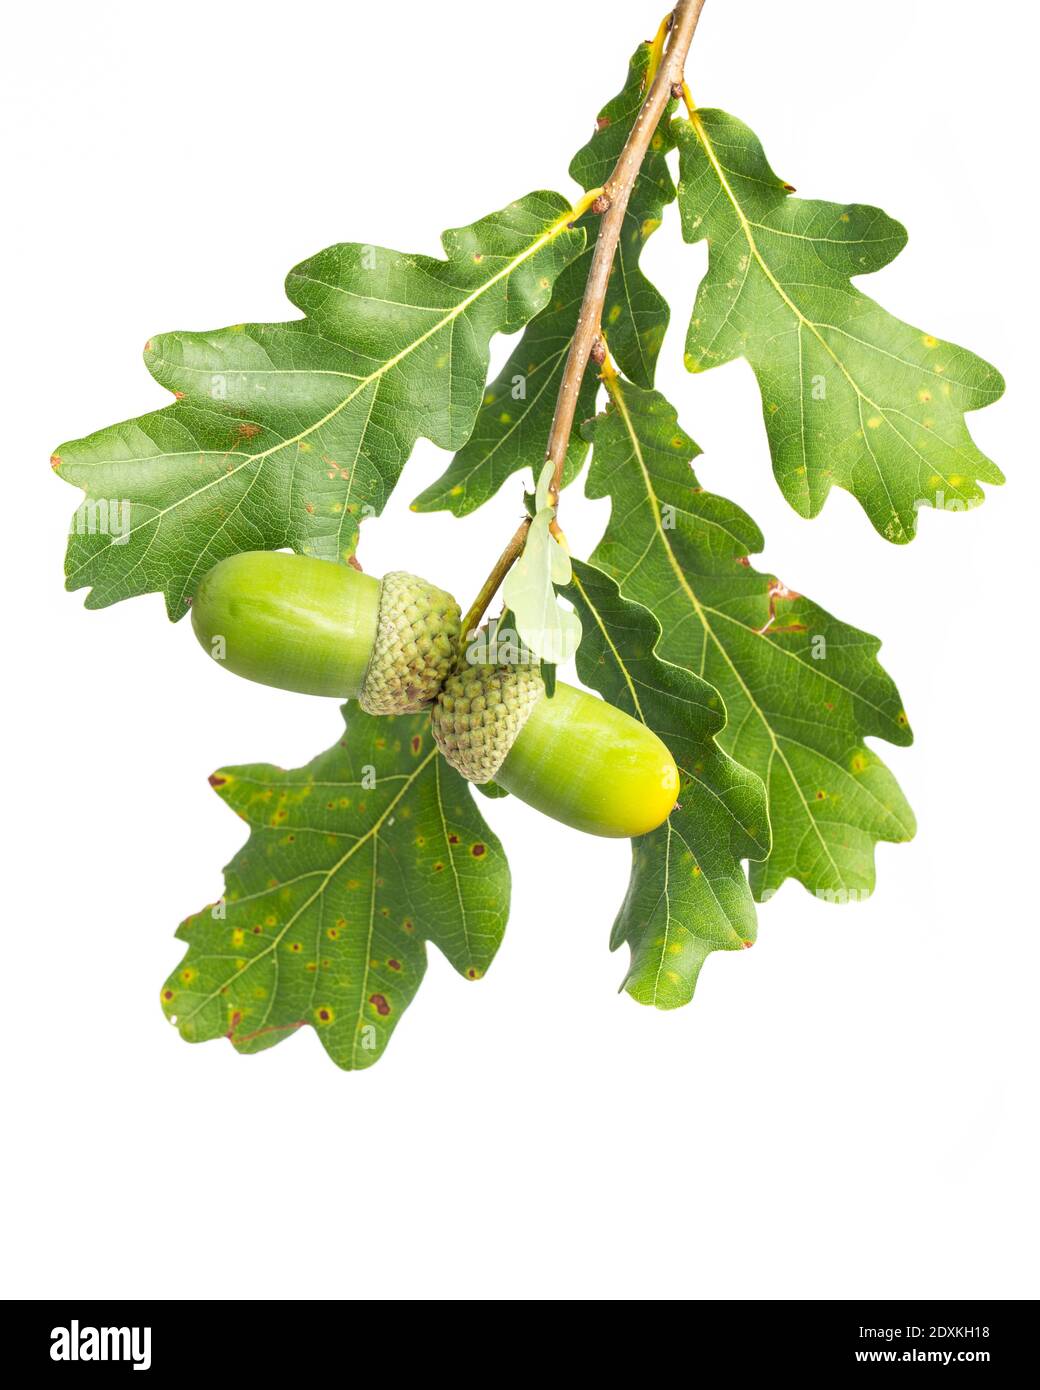 healing plants: oak (quercus) twig on white background Stock Photo